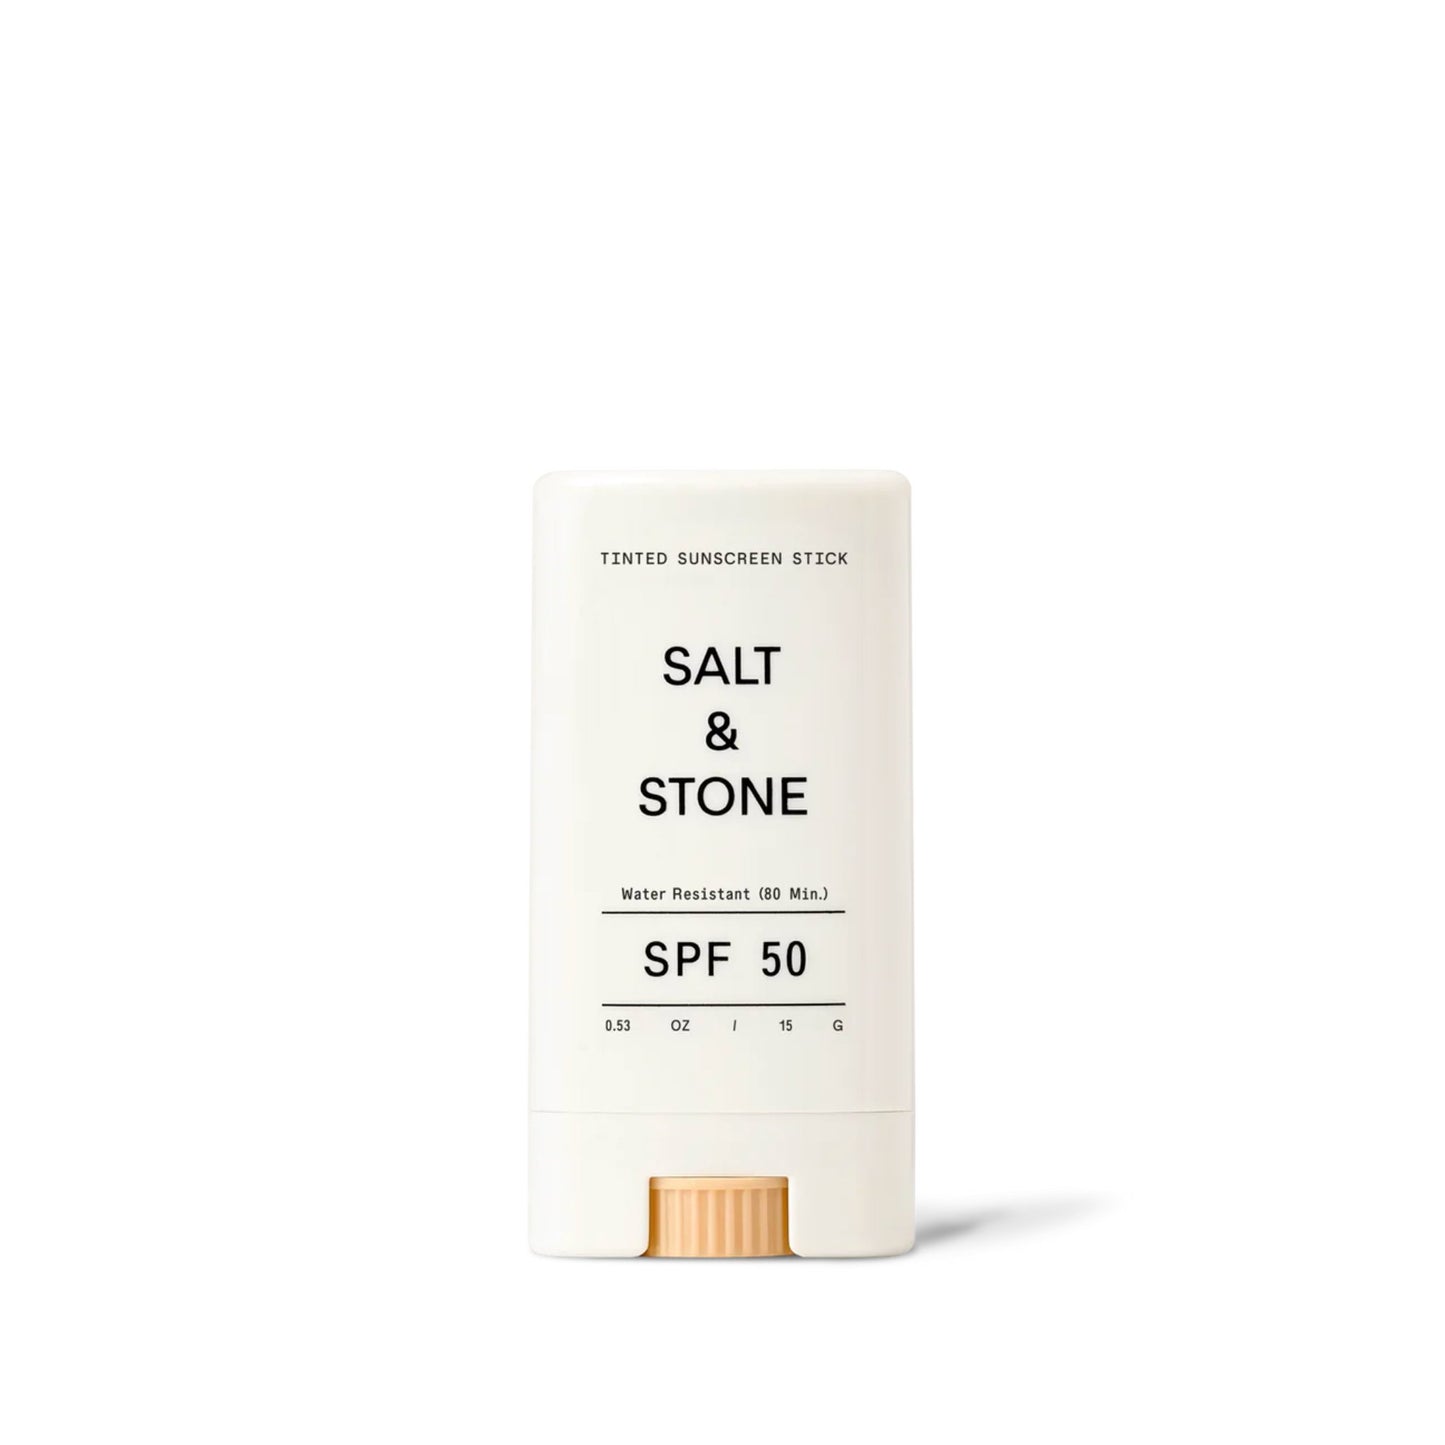 Salt & Stone - Salt & Stone Tinted Sunscreen Stick SPF 50 - ORESTA clean beauty simplified